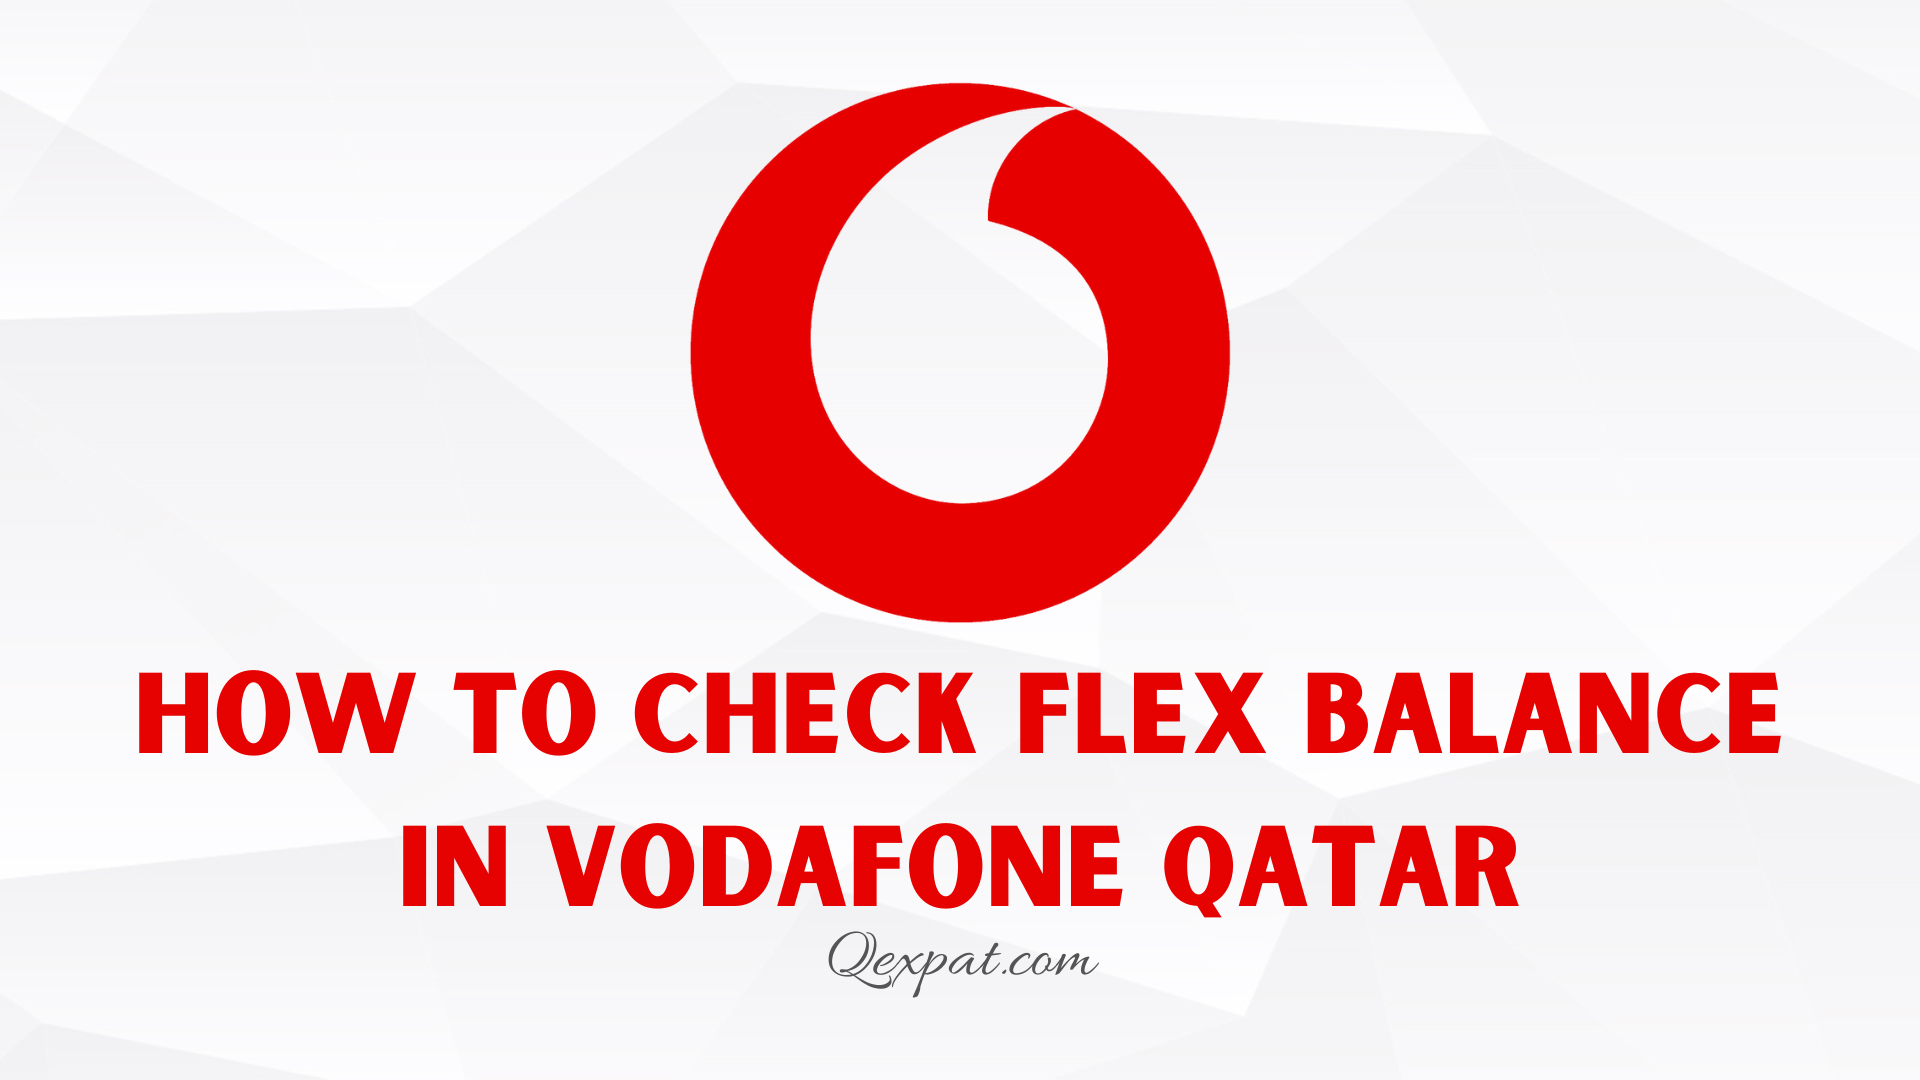 Vodafone Qatar Flex Balance Check